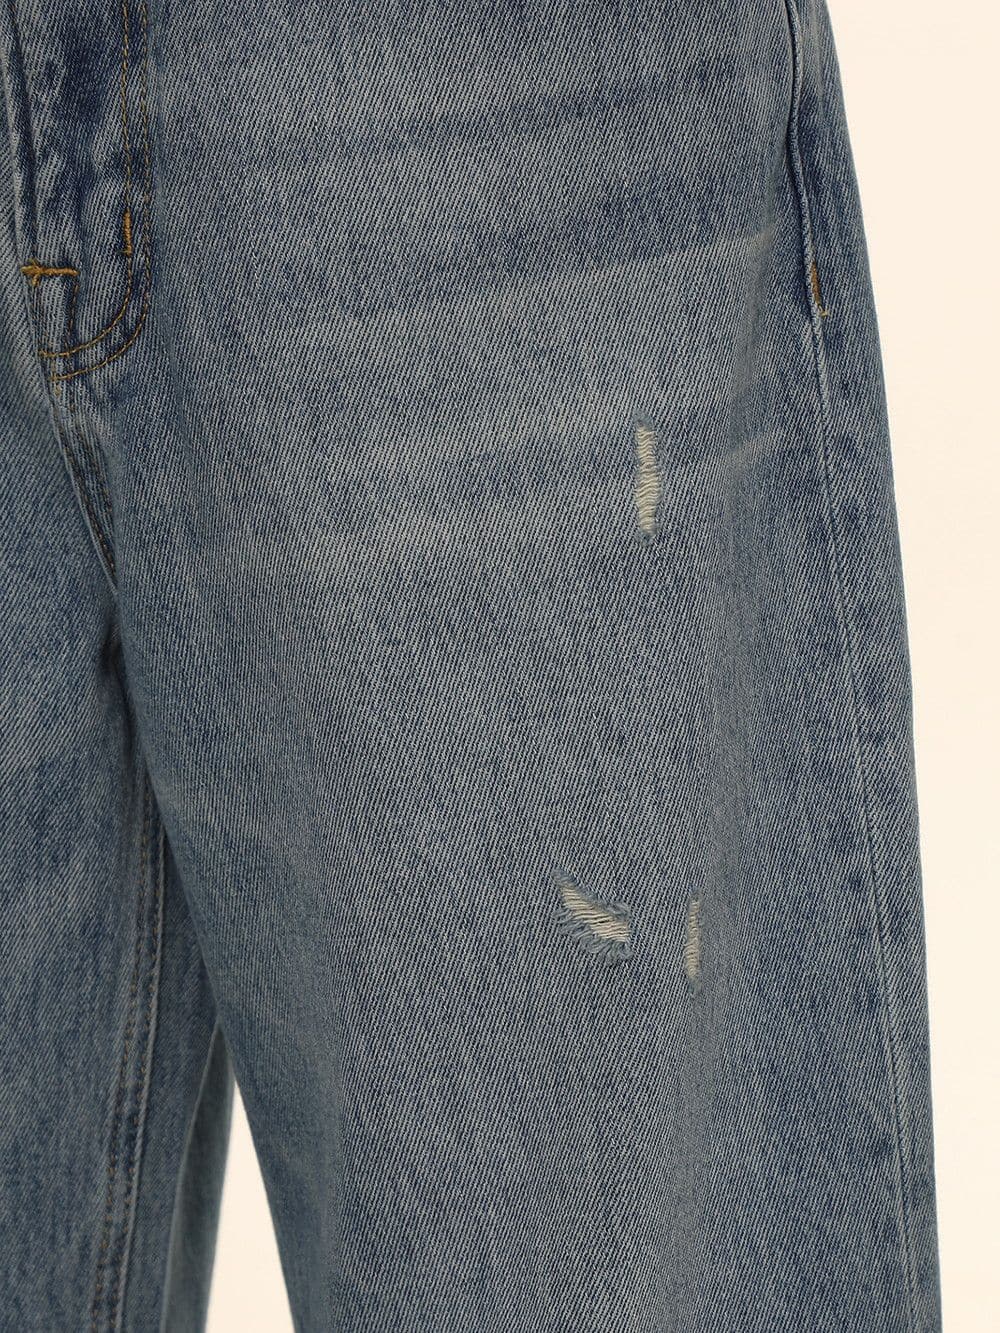 Classic Wide-Leg Denim Jeans - chiclara